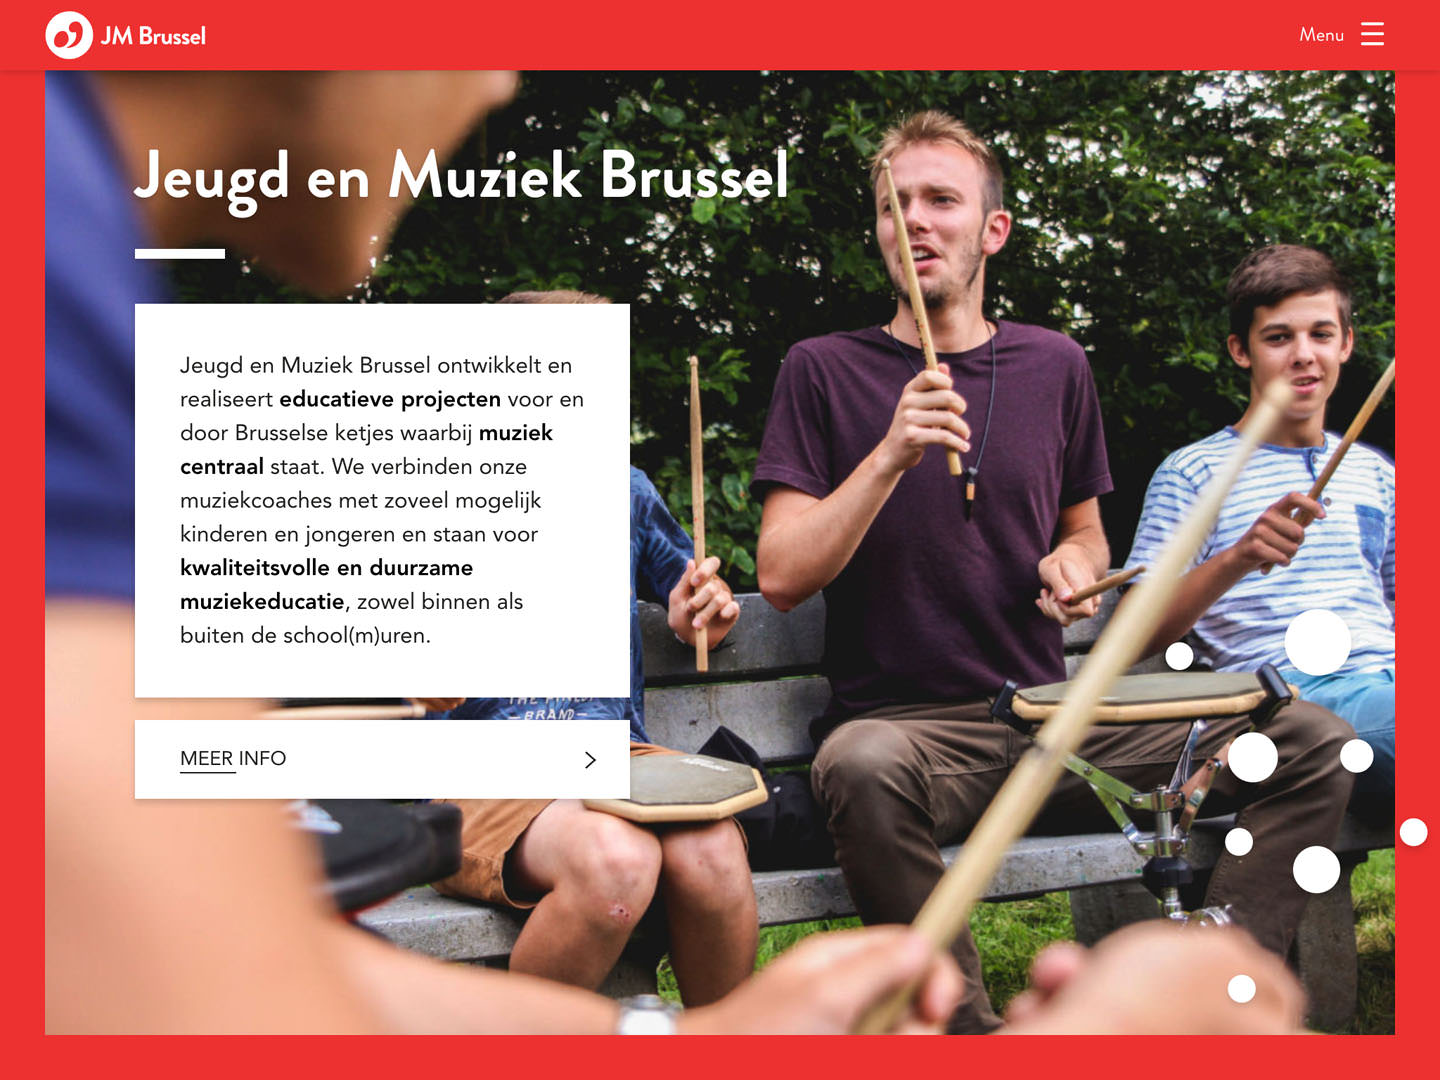 The introduction header of Jeugd en Muziek Brussel.